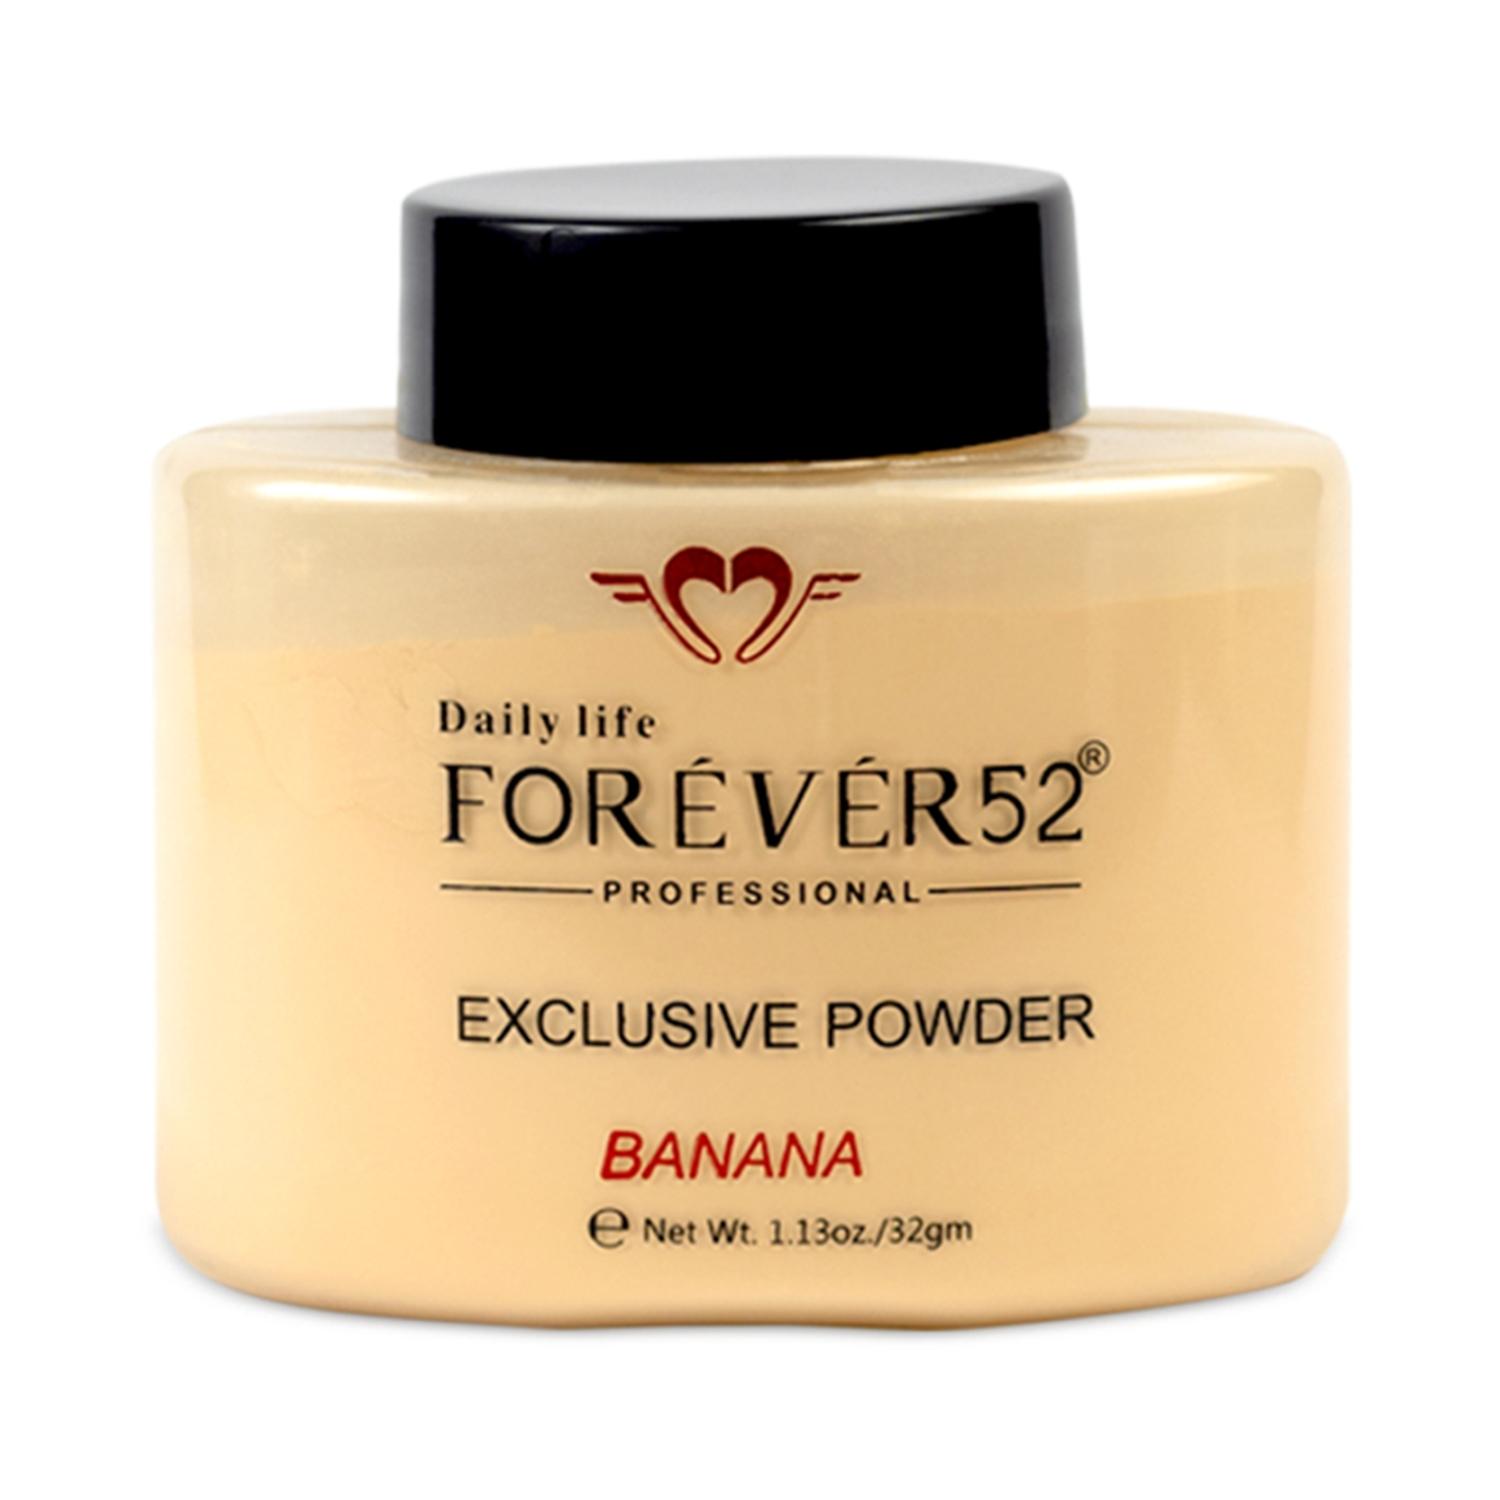 Daily Life Forever52 Banana Powder FBE001 (32gm)